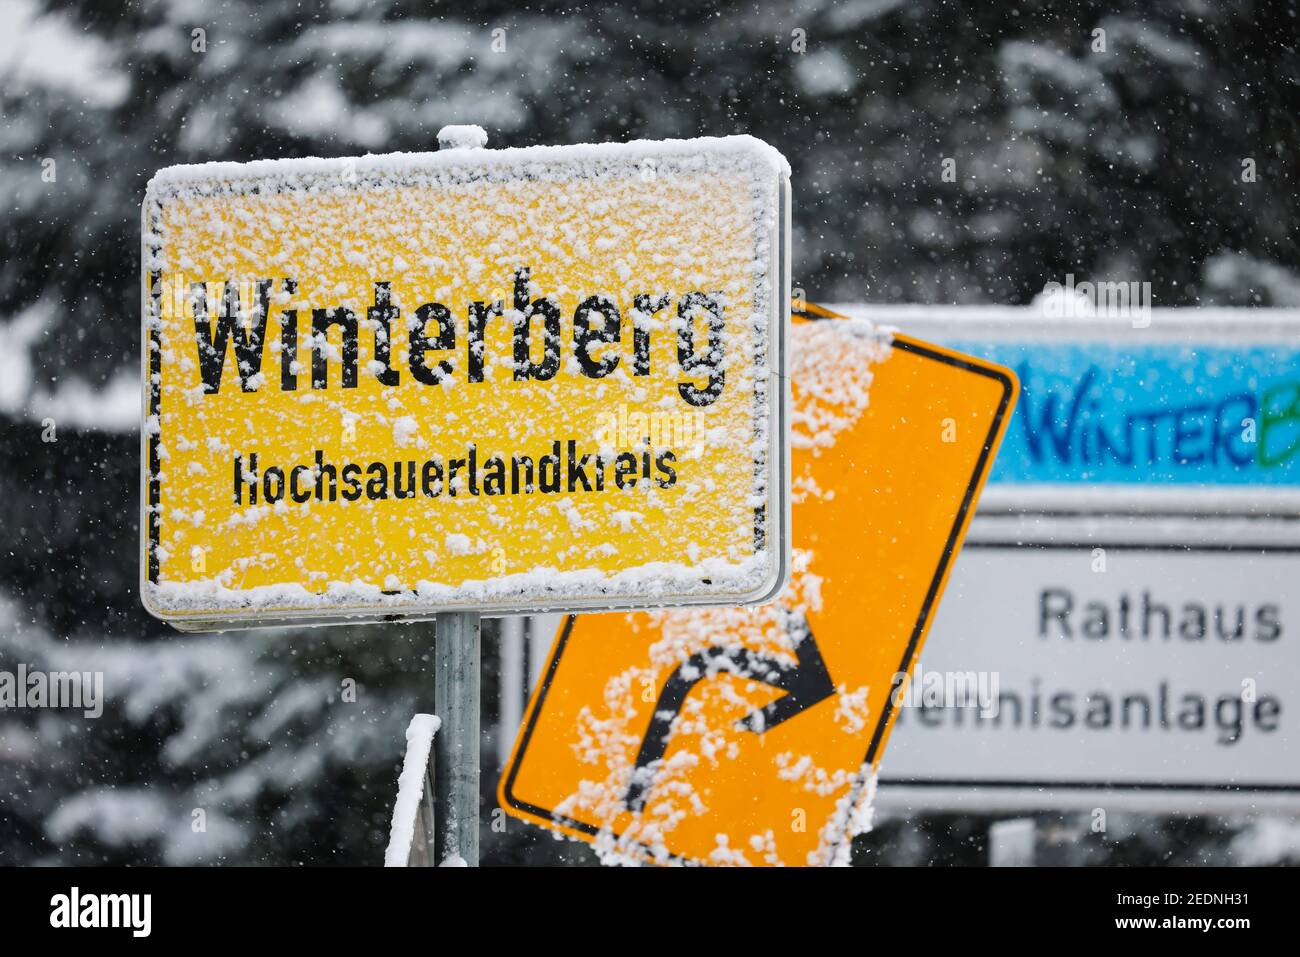 07.12.2020, Winterberg, North Rhine-Westphalia, Germany - Snow-covered Winterberg town sign, no winter sports in Winterberg in times of corona crisis Stock Photo